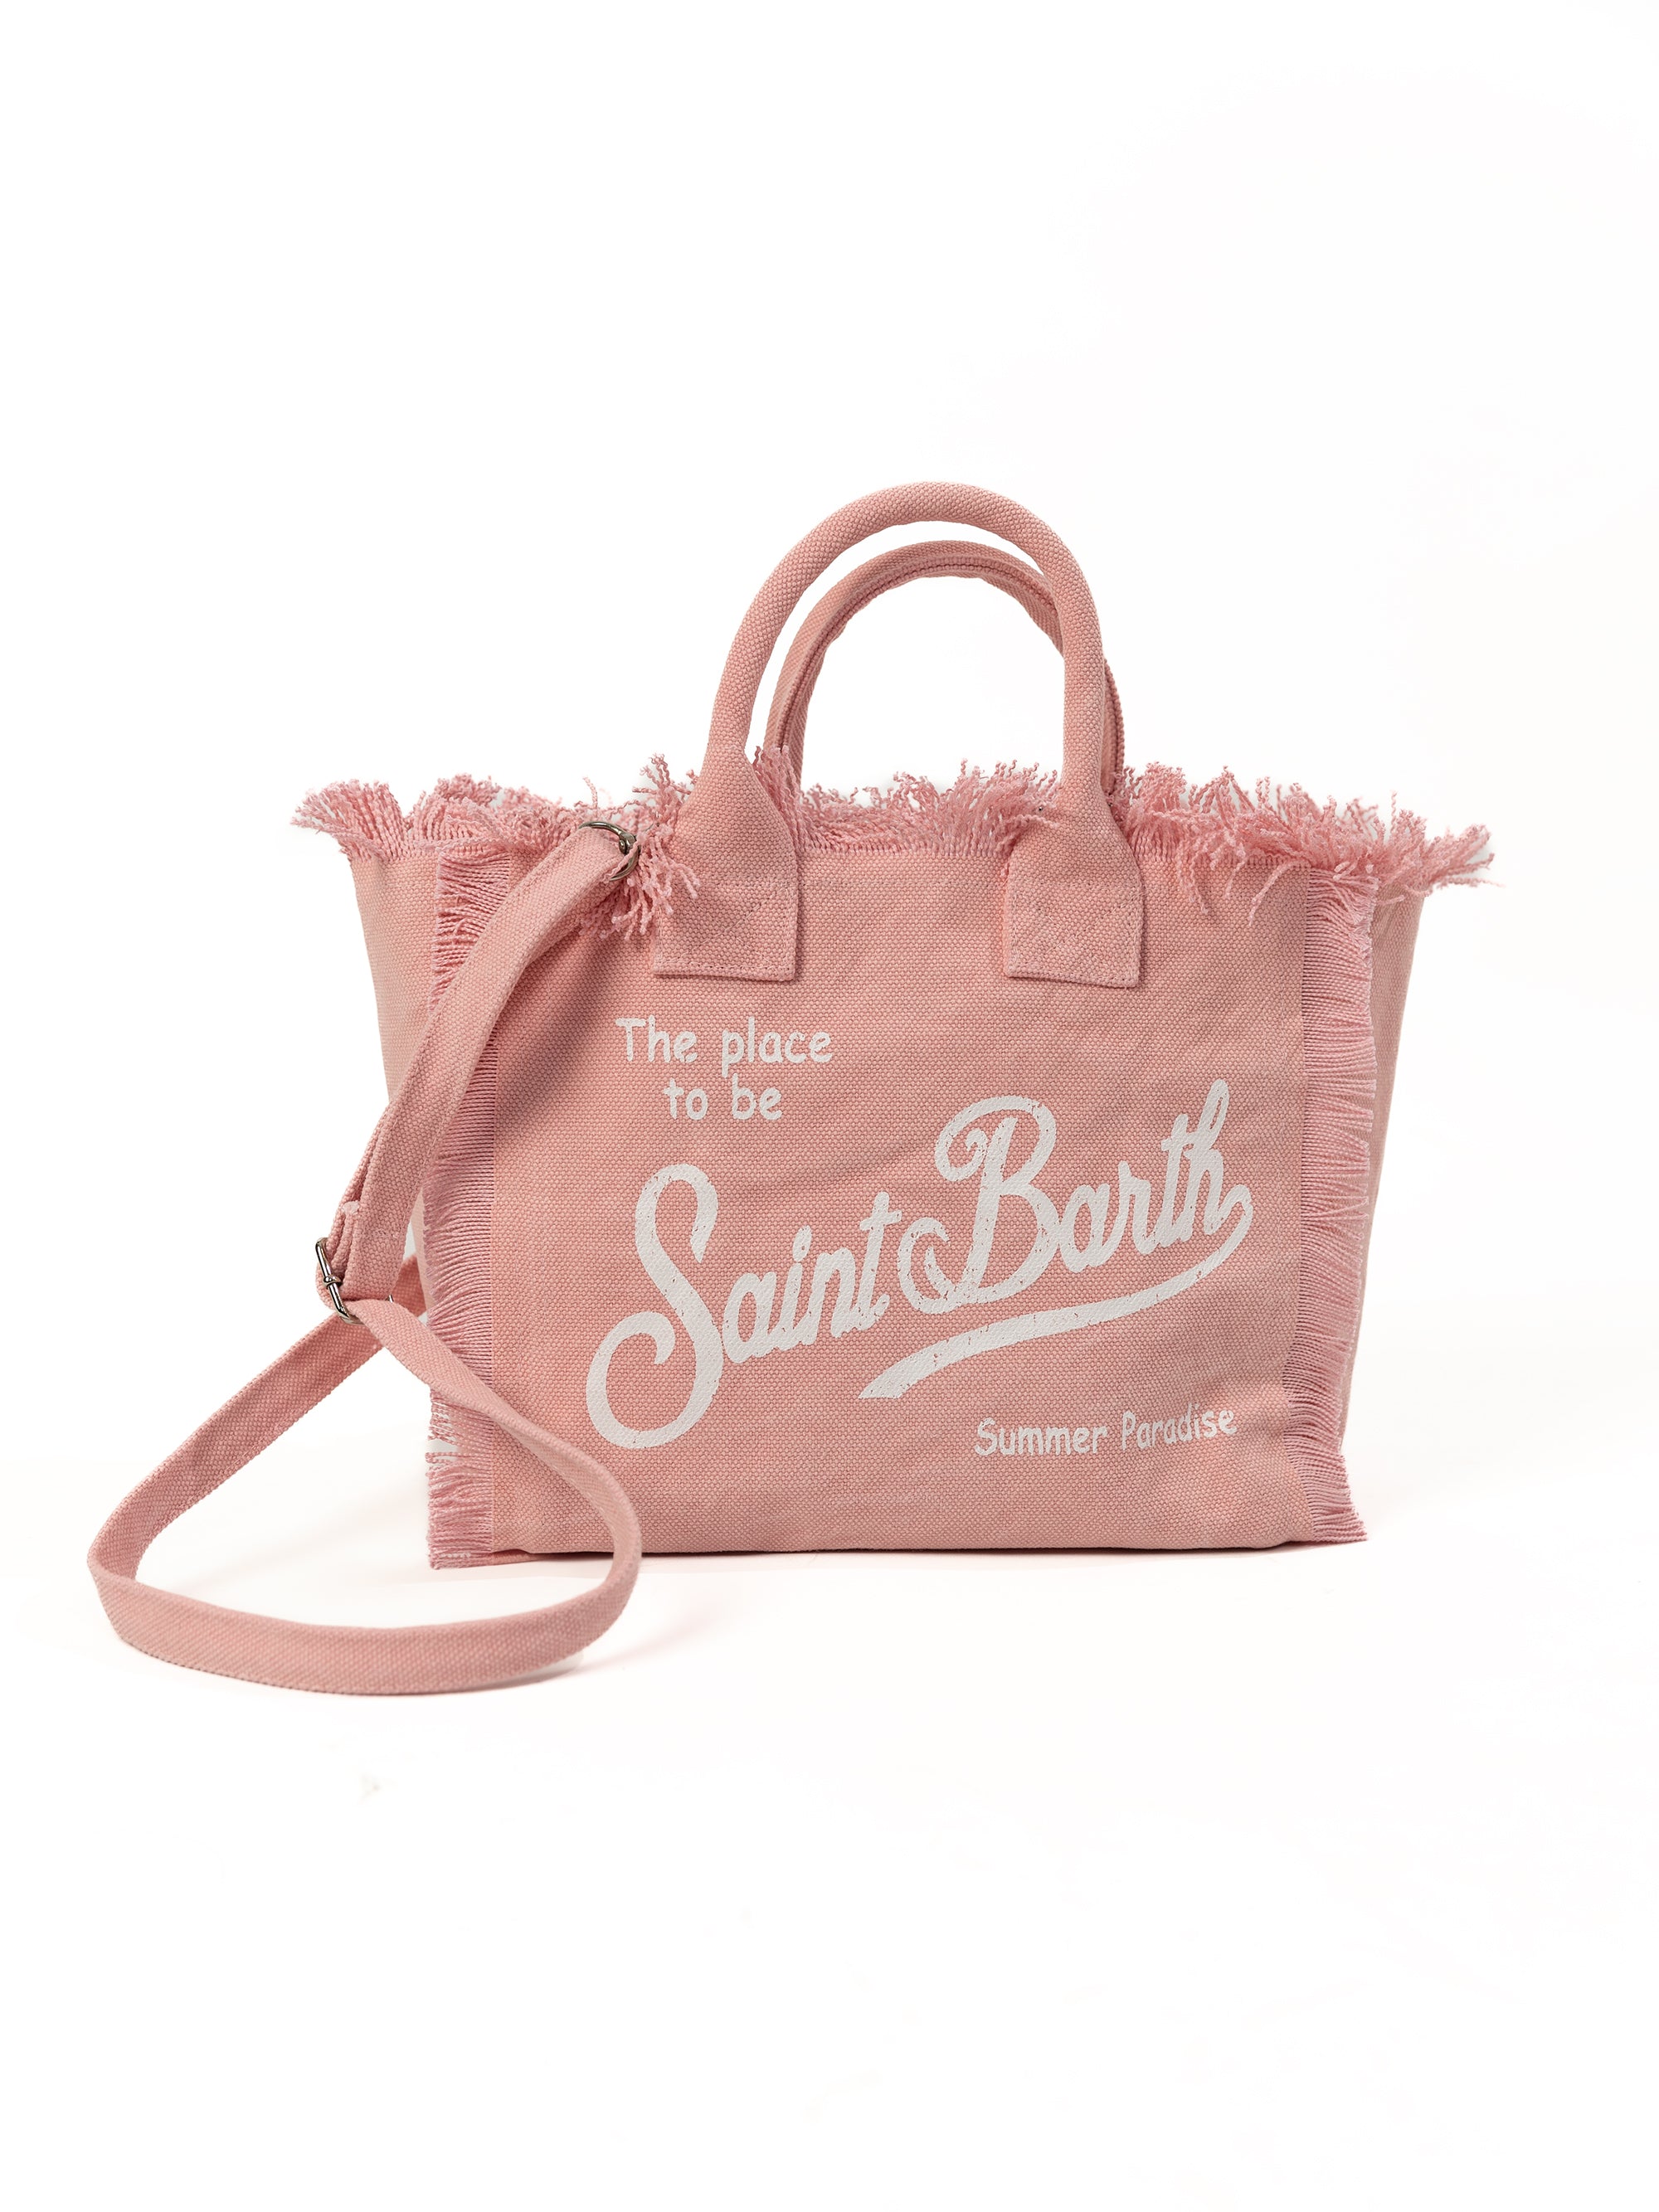 Handbag with Shoulder Strap in Pink Canvas